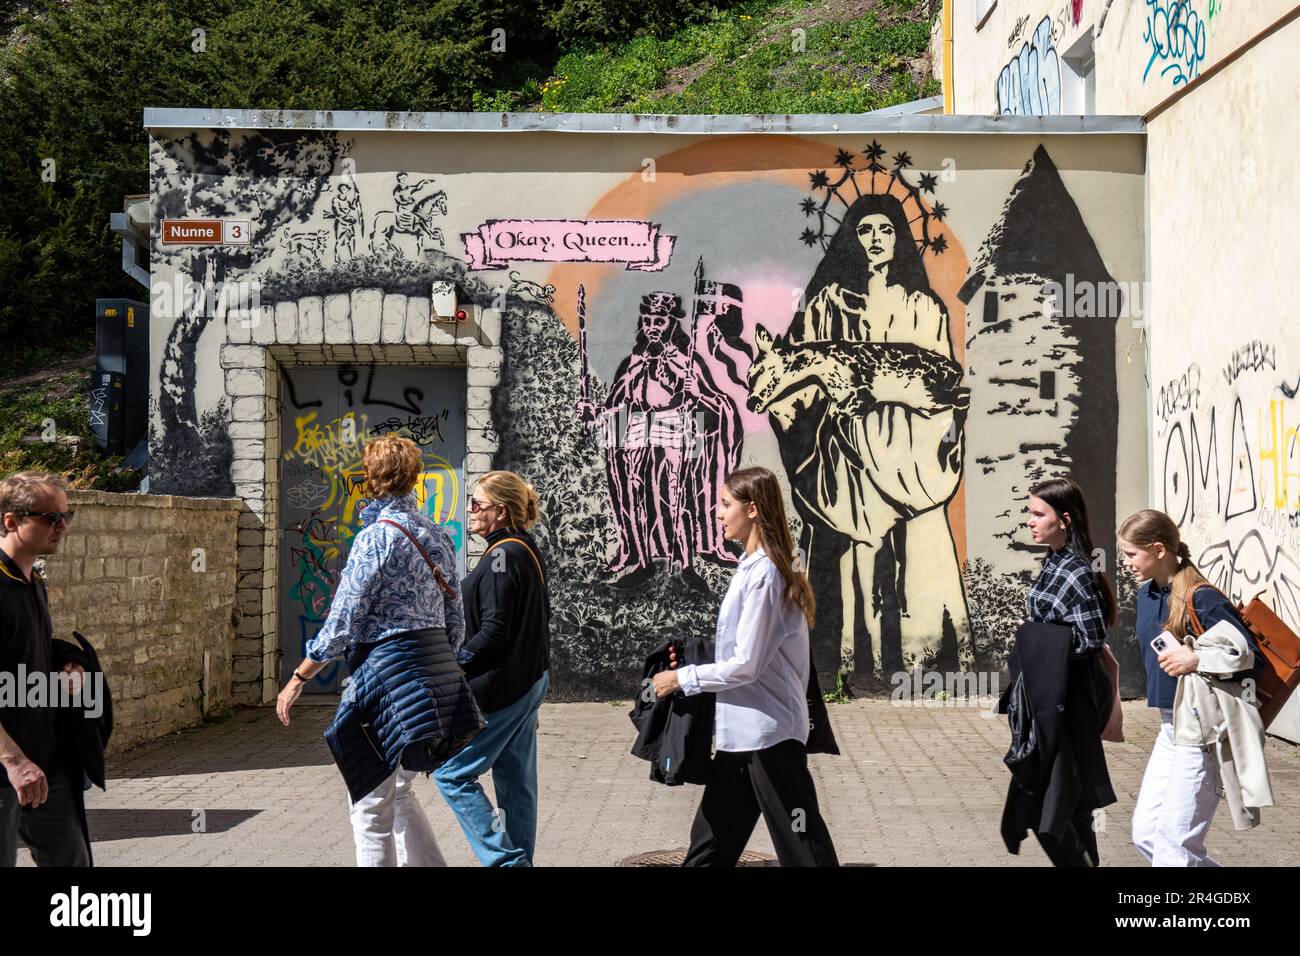 People passing large mural street art stencil graffiti by Marie Soosaar at Nunne 3 in Vanalinn, the old town of Tallinn, Estonia Stock Photo